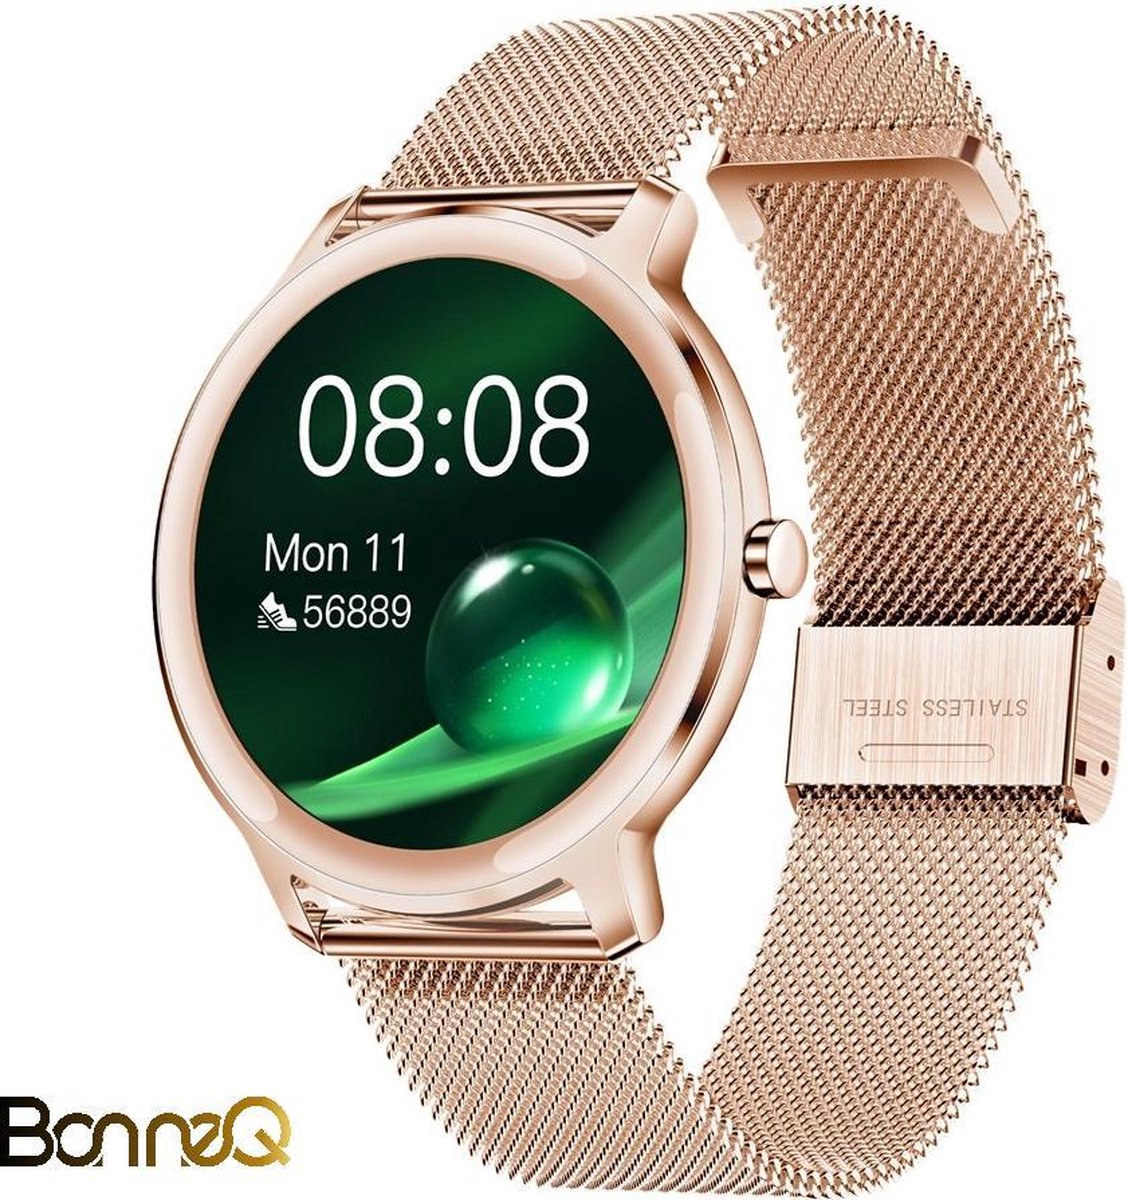 BonneQ - Luxe dames - Stappenteller - Stappenteller horloge dames - Hartslagmeter - Calorieënverbruik - Sportfuncties - Ontvang berichten (social media) - Bellen - Slaaptracker - Rosé goud - Smart Gear Compare